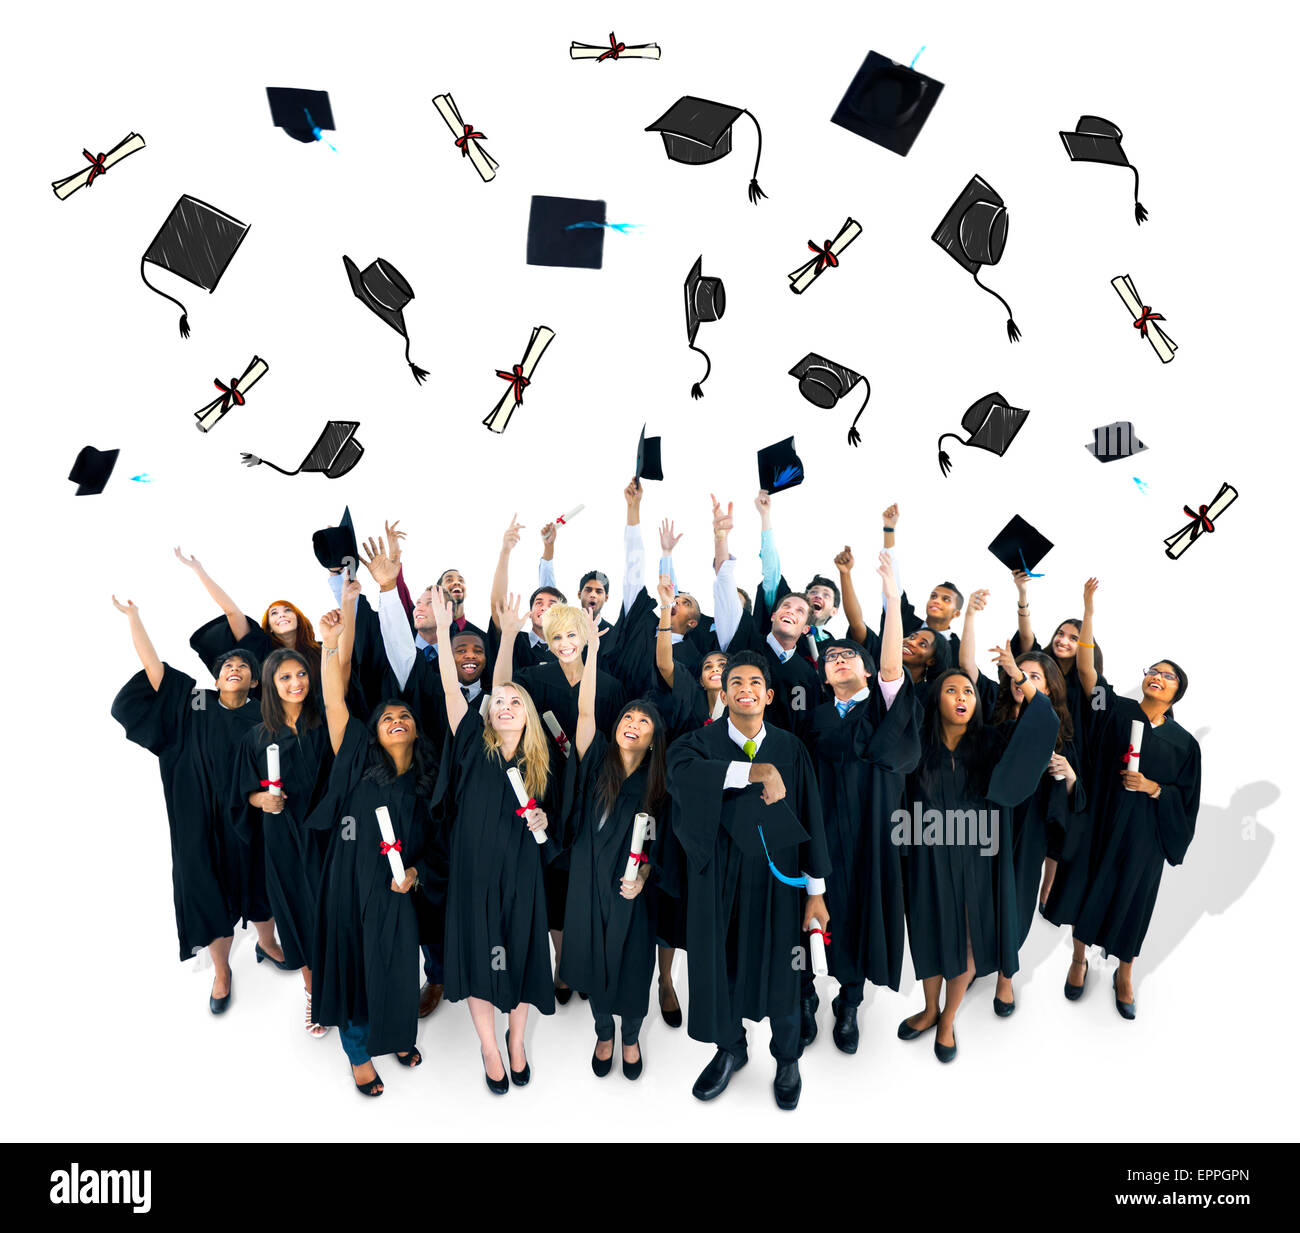 Graduates throwing their graducation caps. Stock Photo